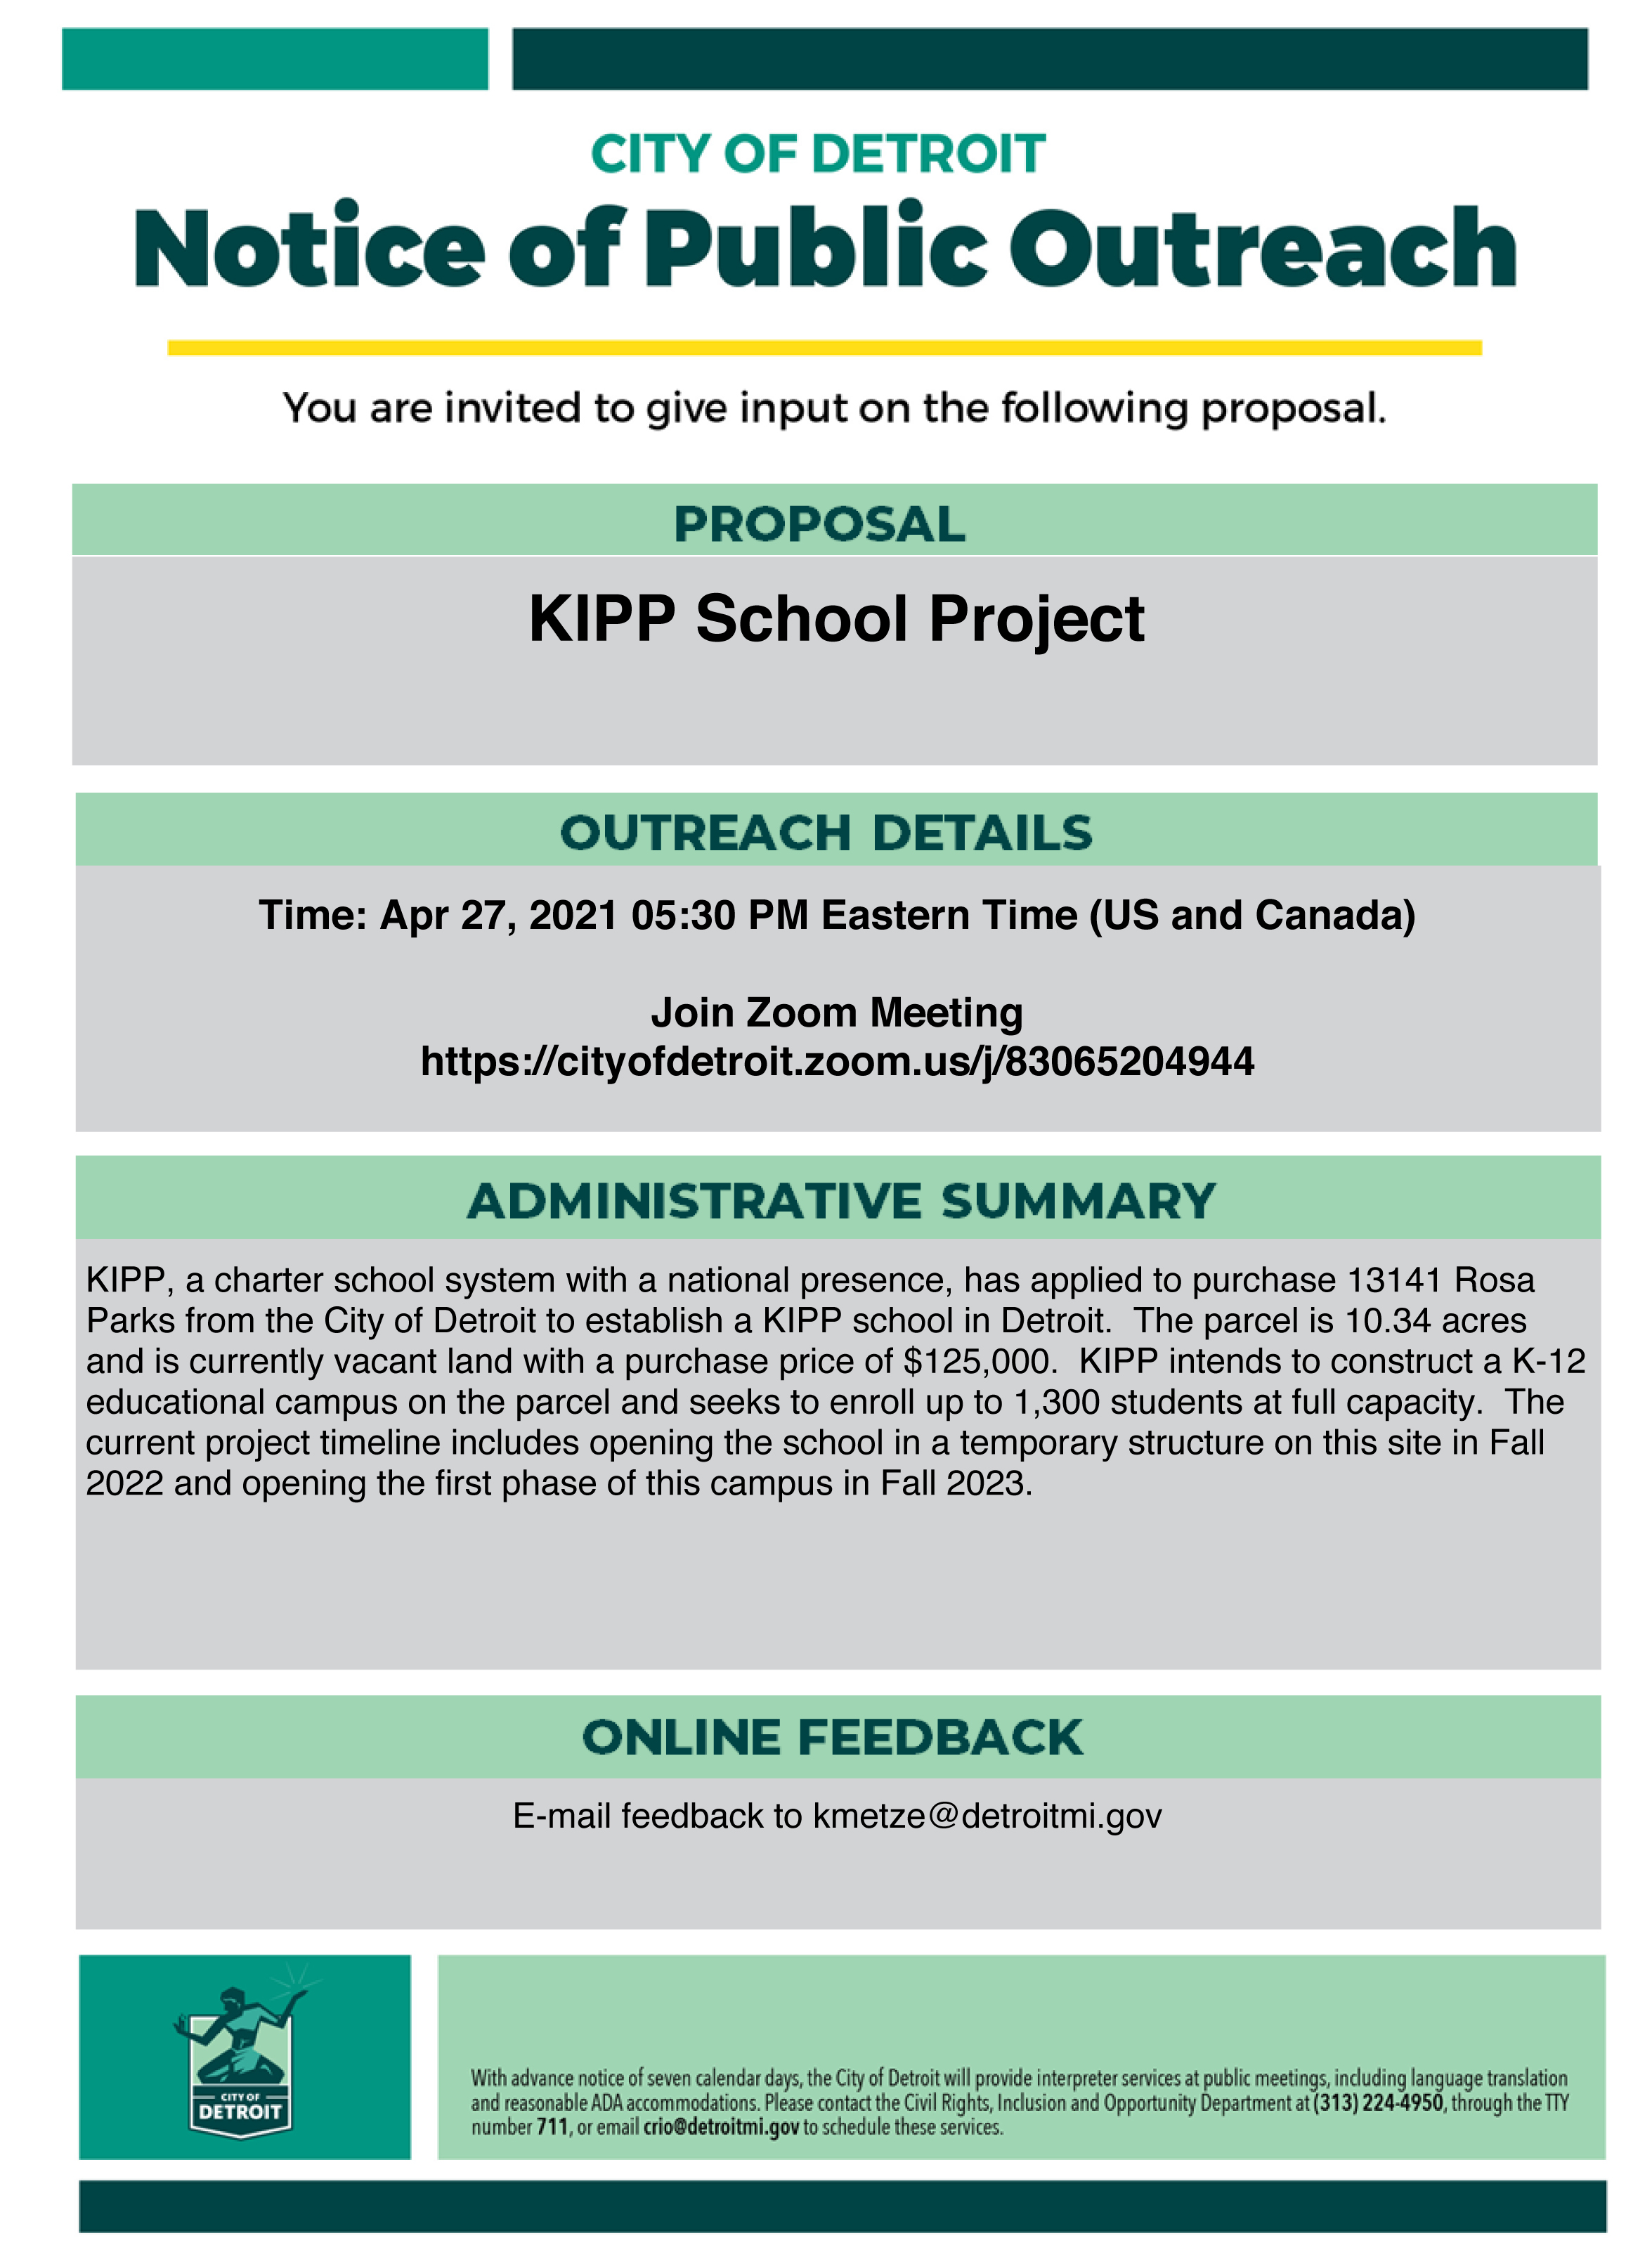 Notice of Public Outreach: KIPP School Project